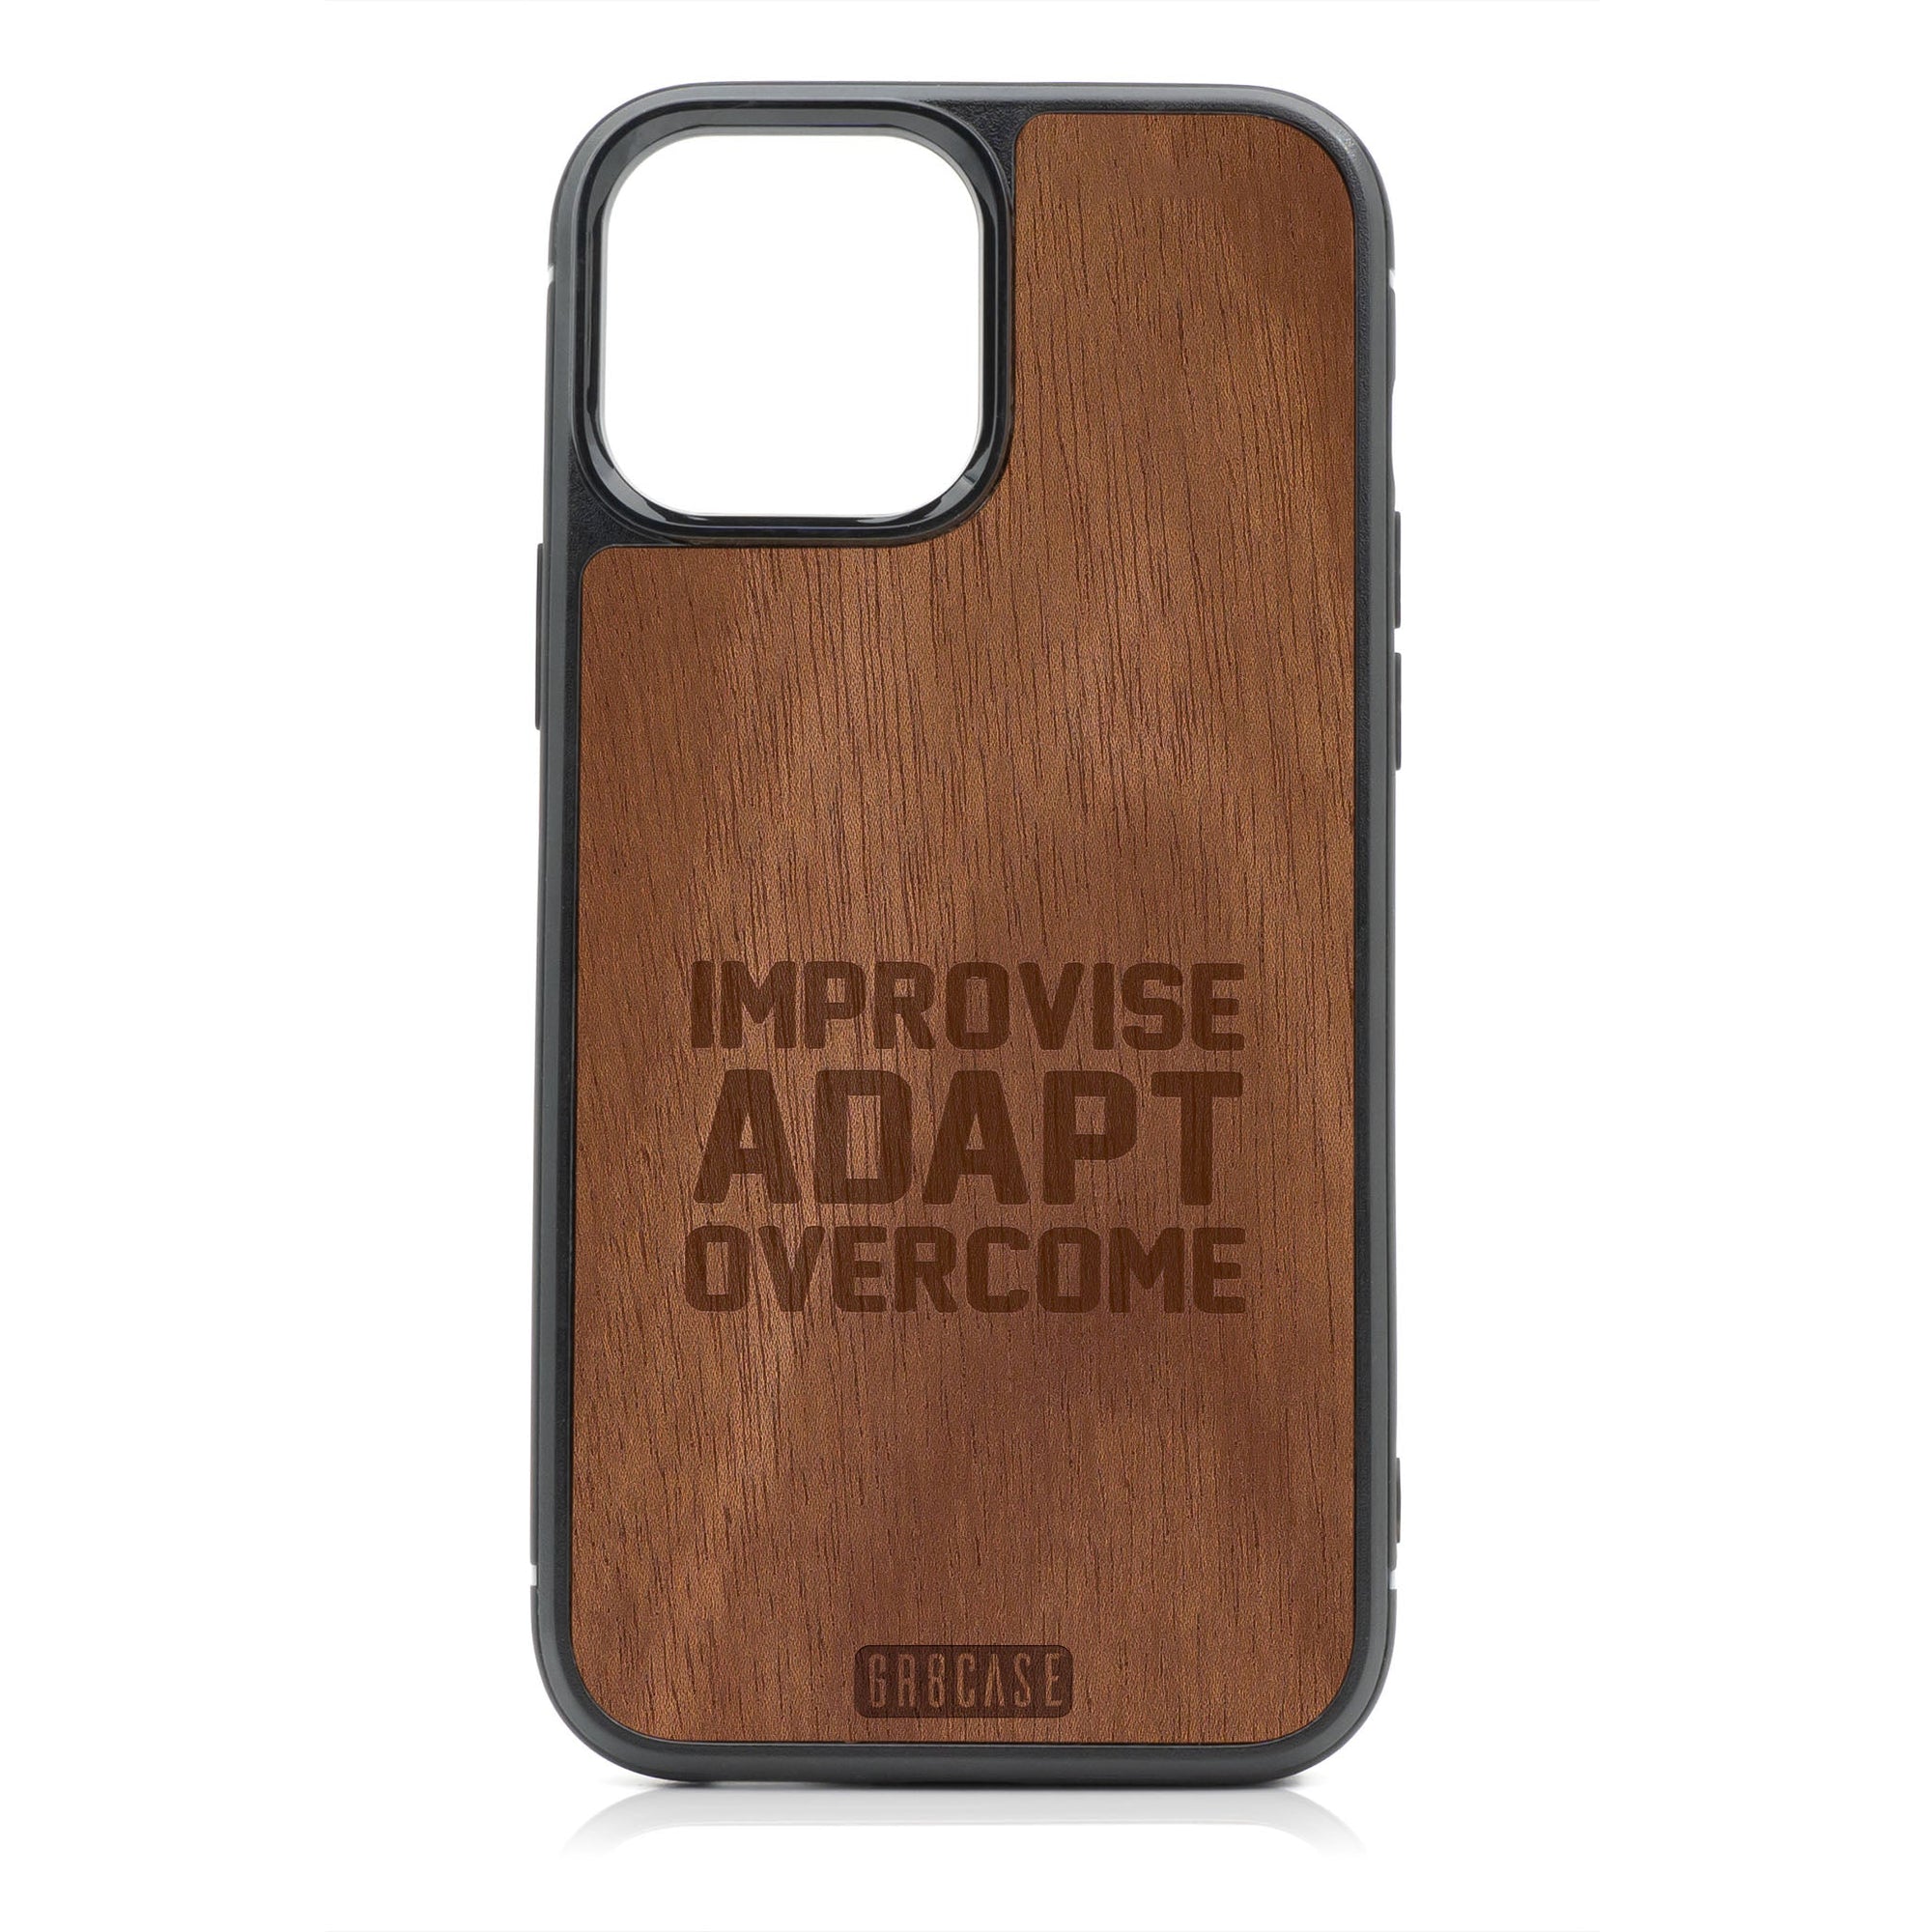 Improvise Adapt Overcome Design Wood Case For iPhone 14 Pro Max